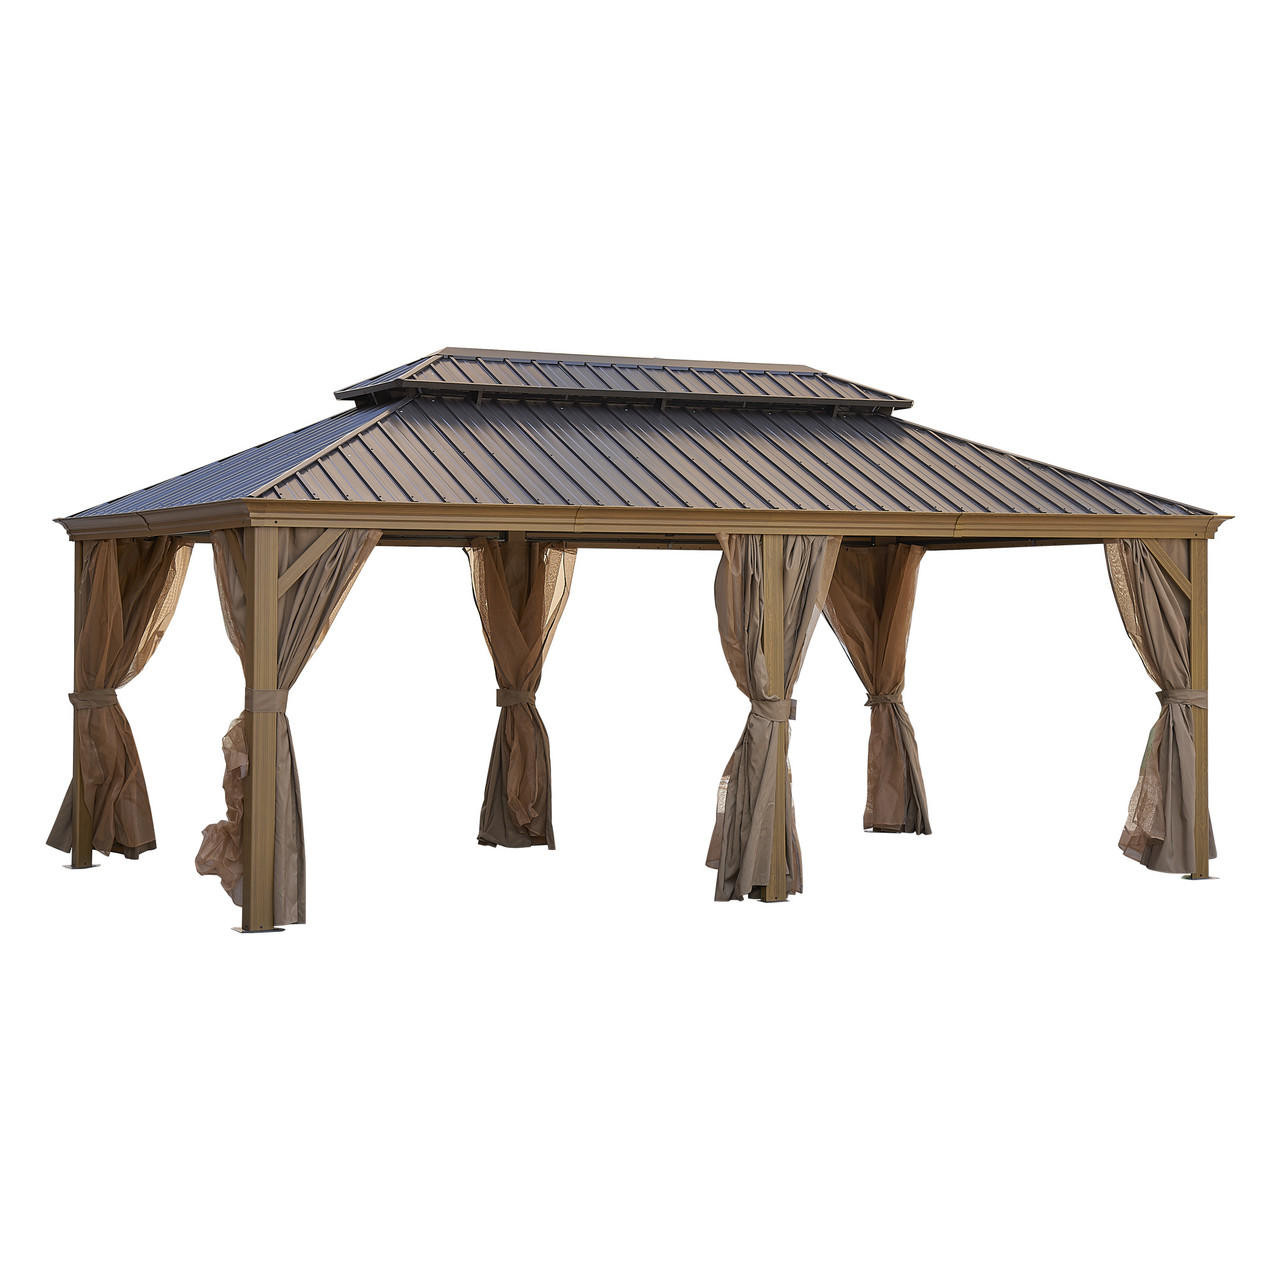 Chicken Pieces Patio Aluminum Gazebo with Steel Canopy | Outdoor Permanent Hardtop | 12*20FT 